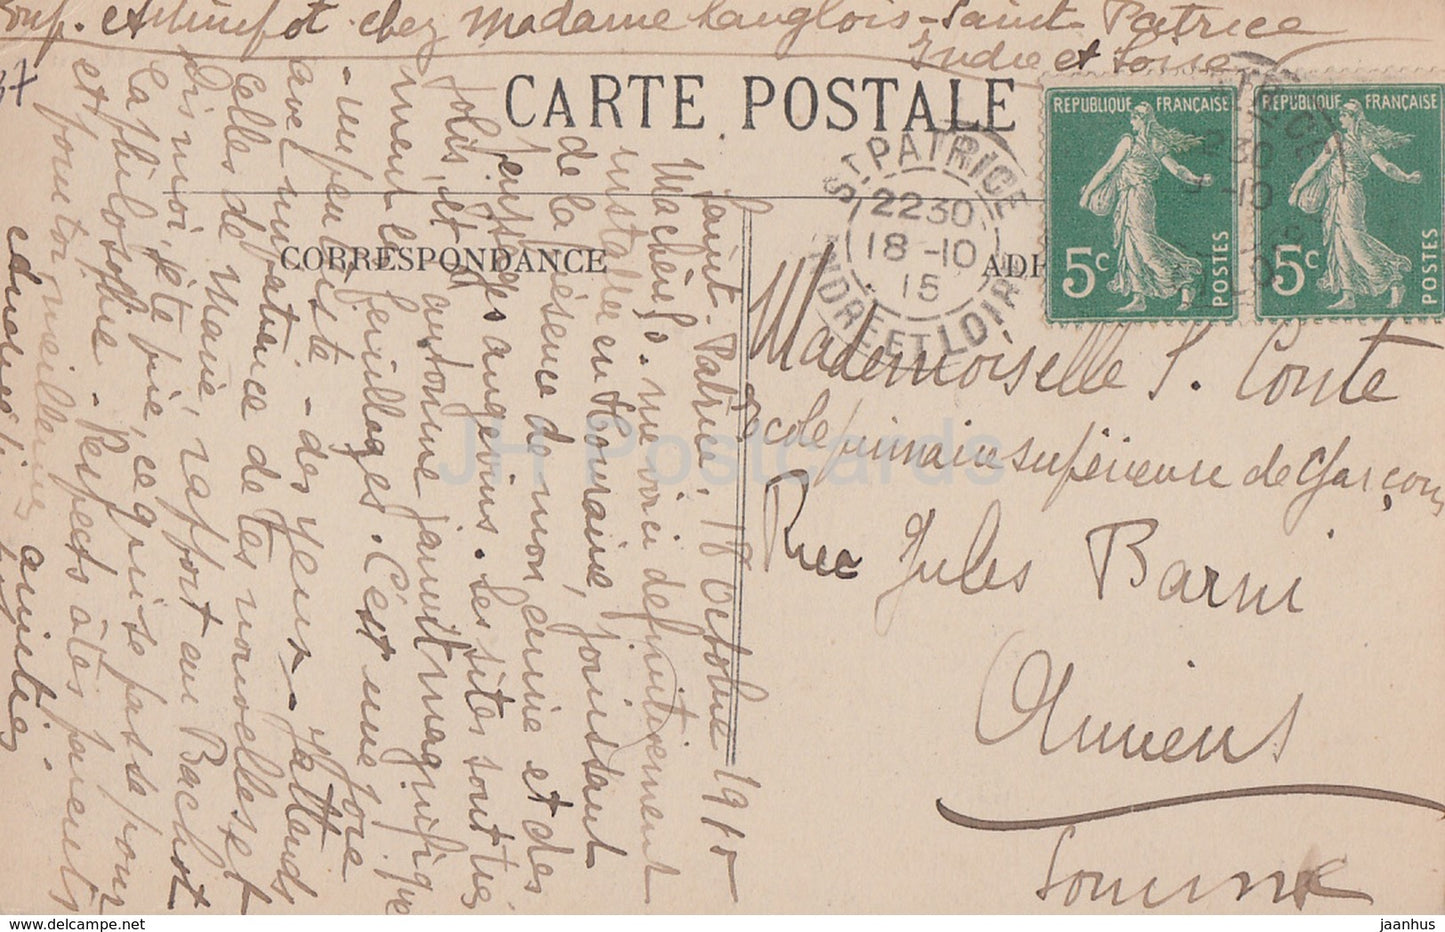 Saint Patrice - Entree du Chateau - castle - old postcard - 1915 - France - used